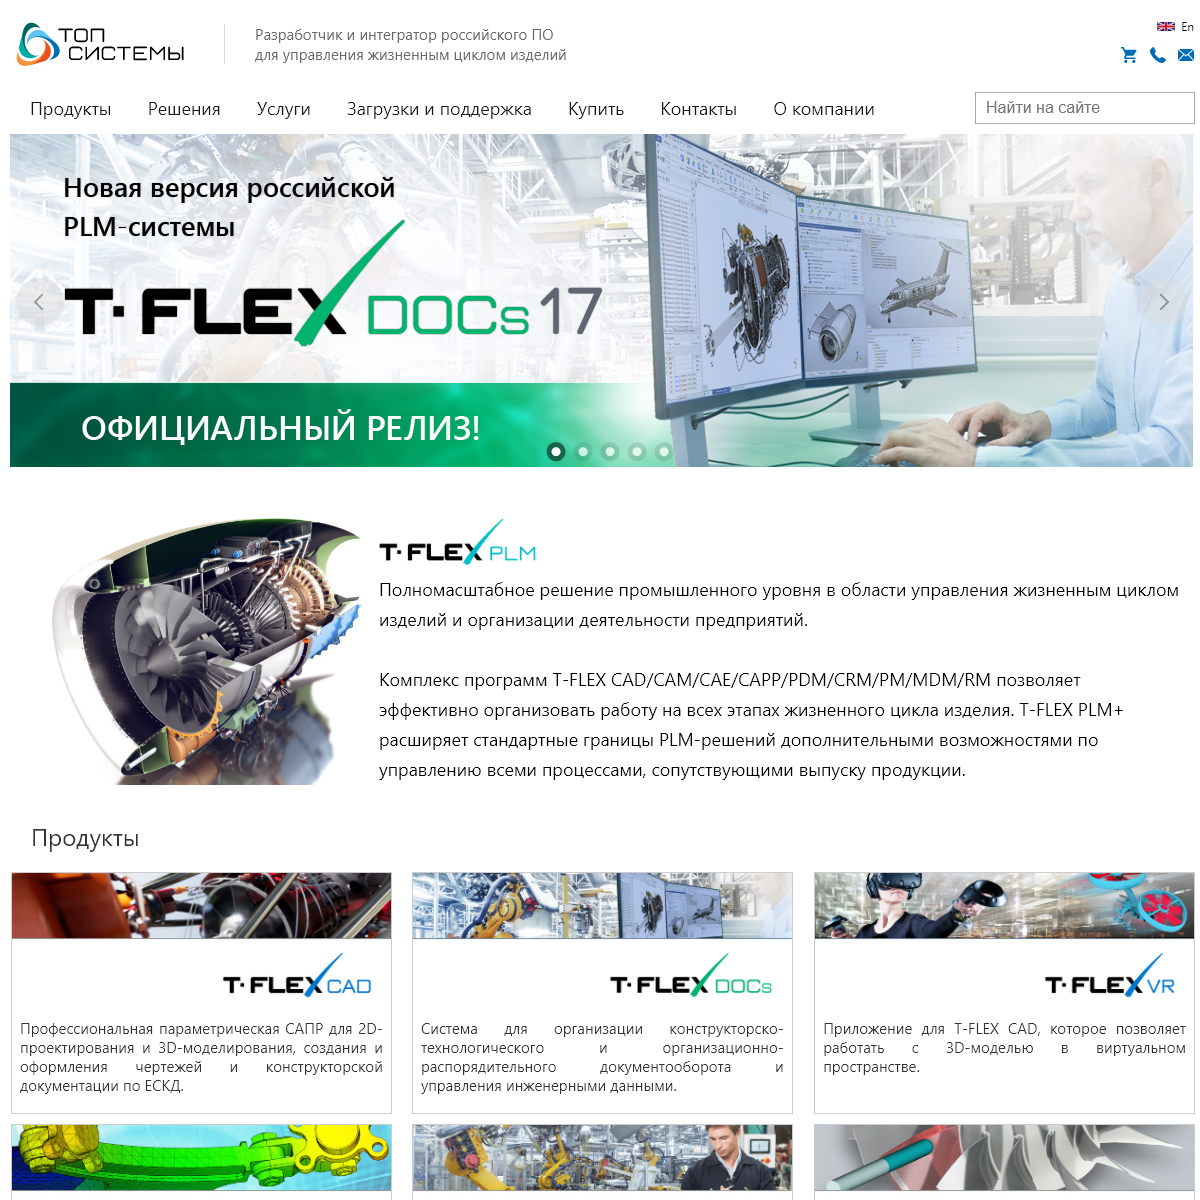 A complete backup of tflex.ru